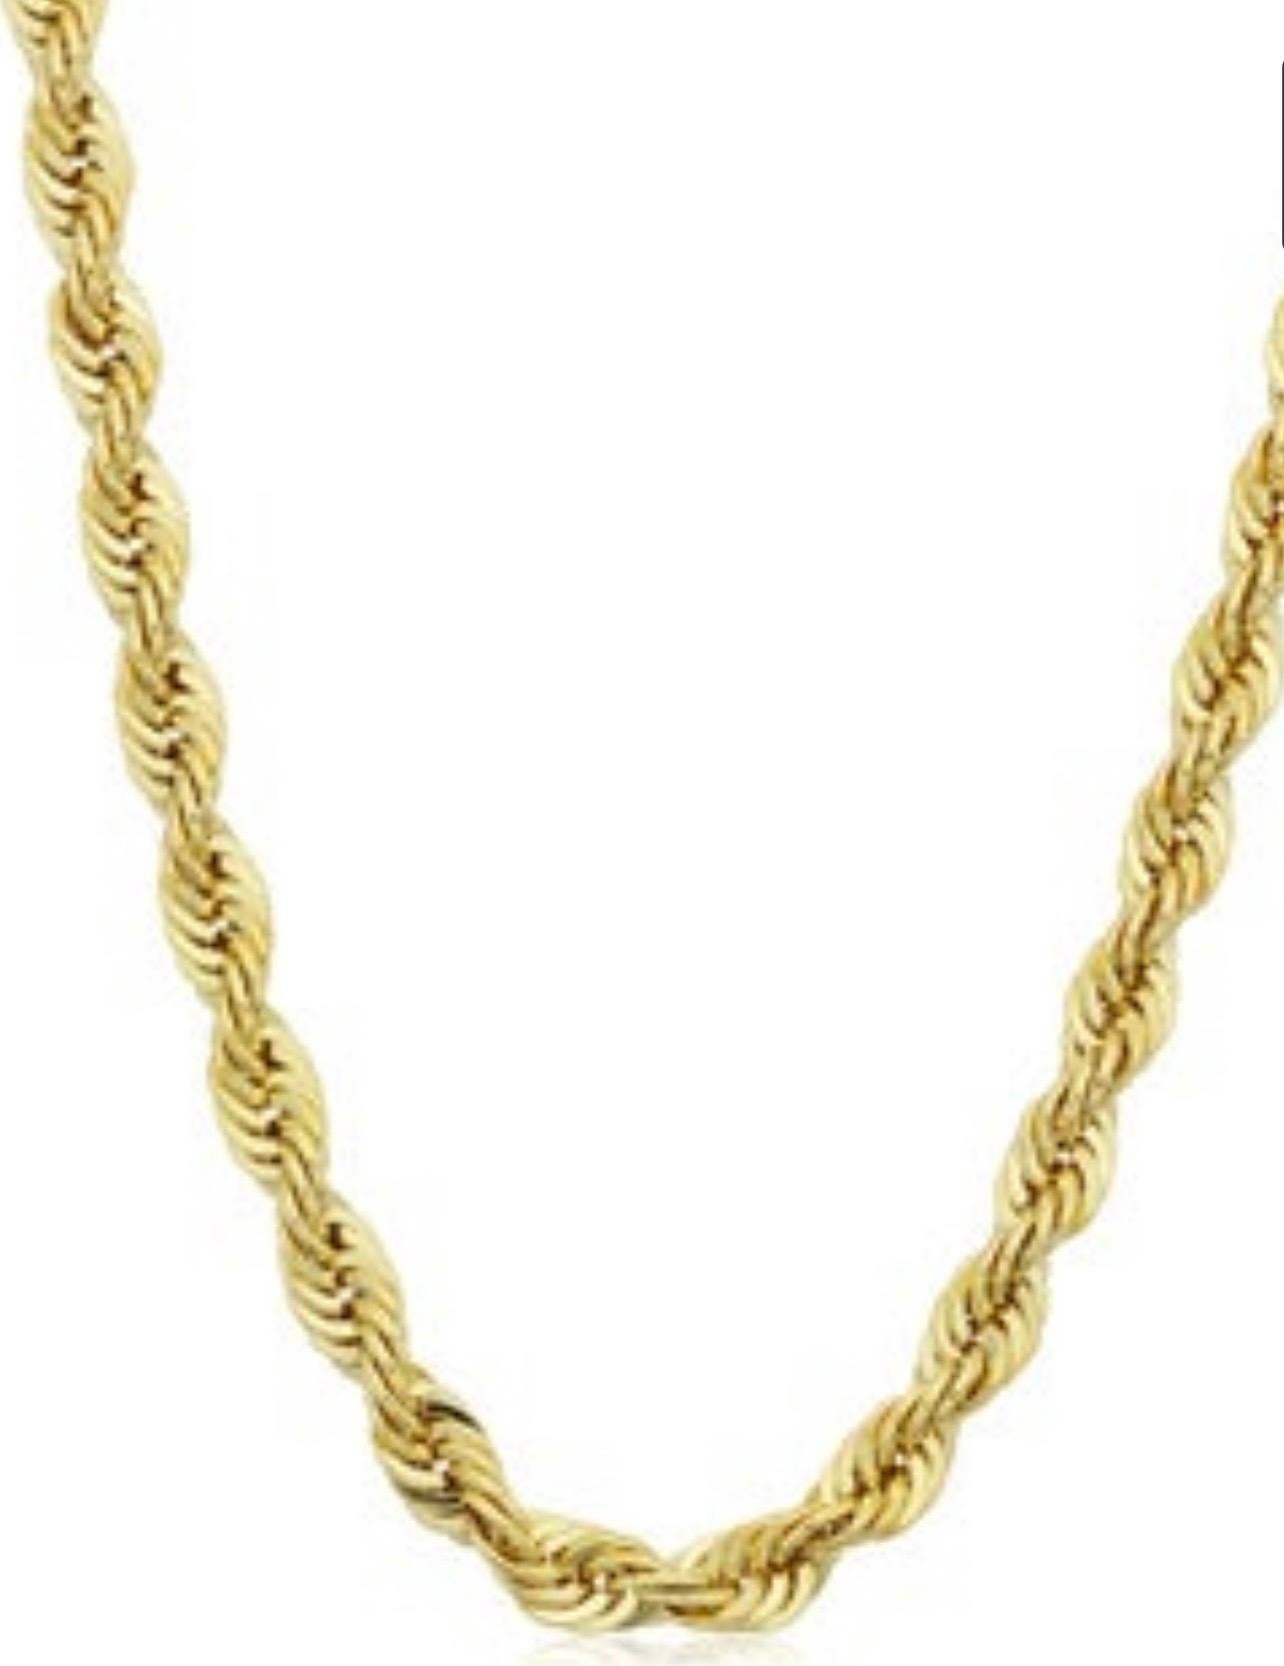 36 inch gold chain